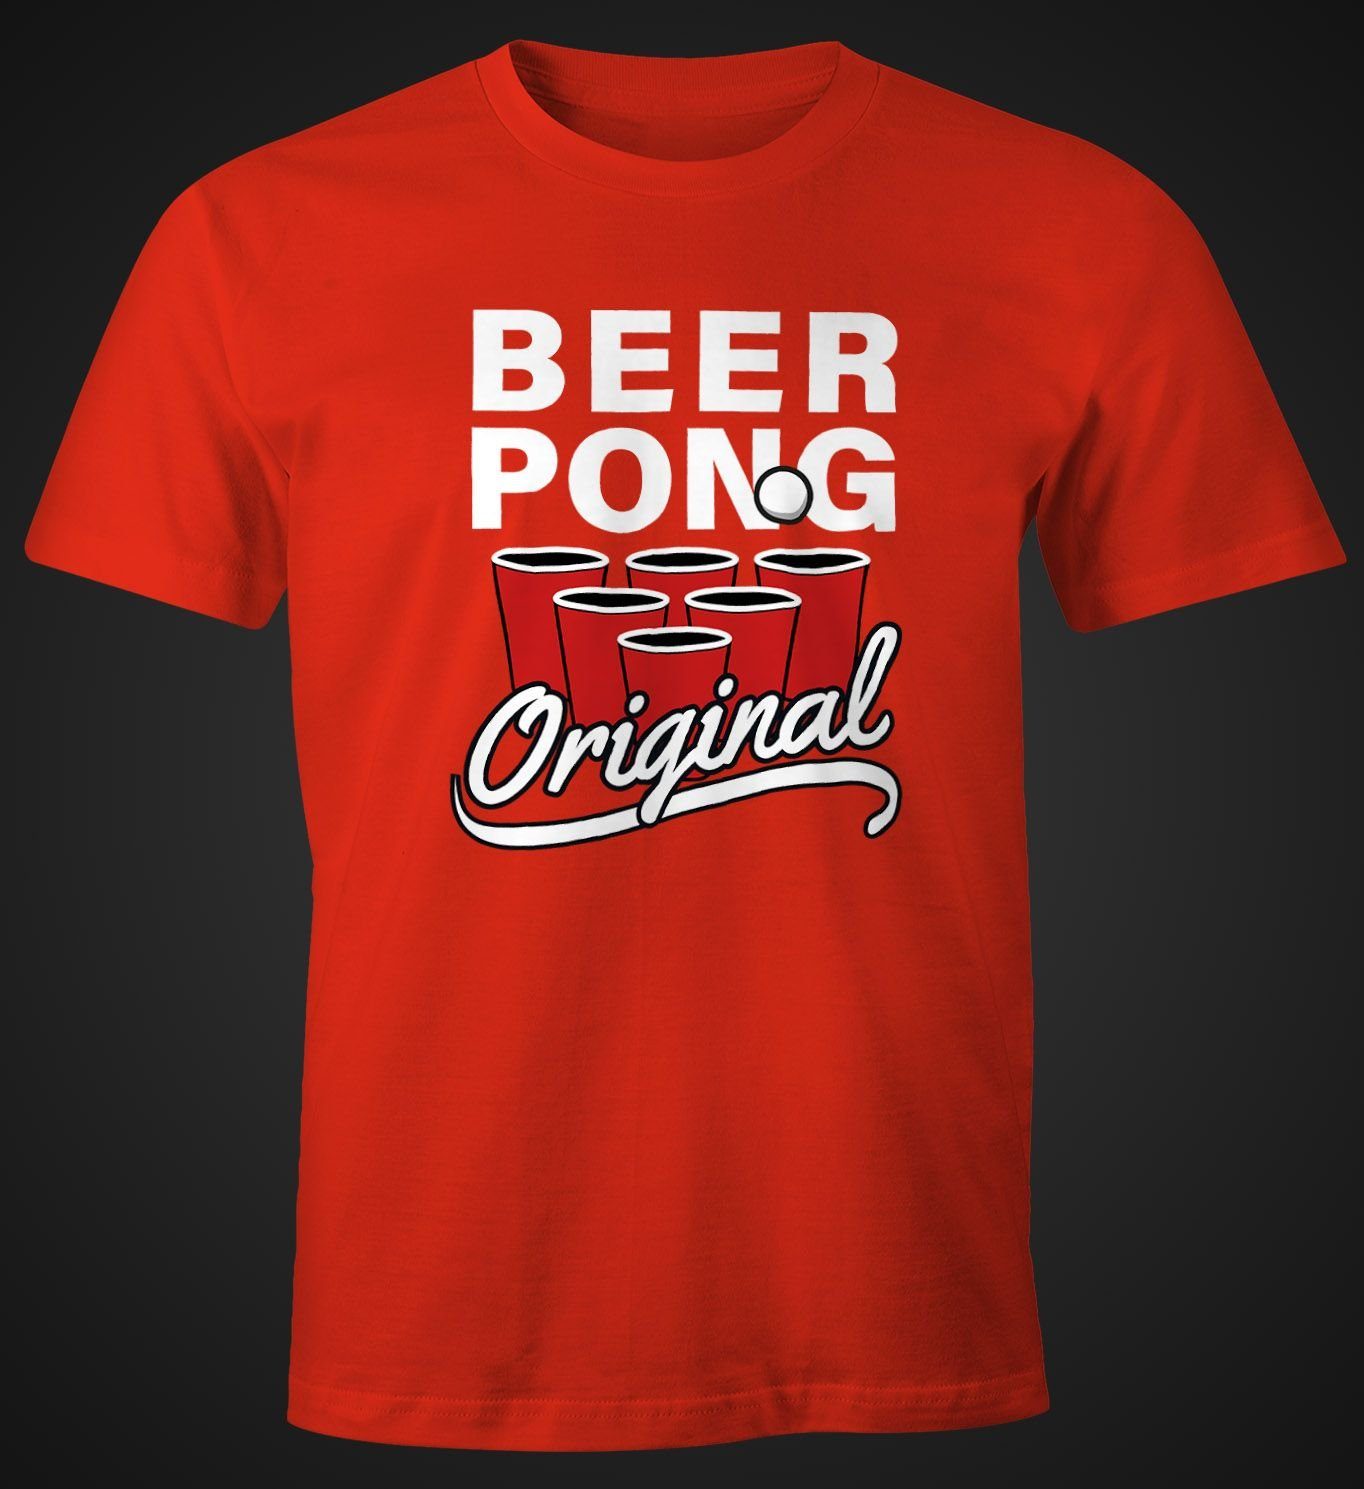 MoonWorks Print-Shirt Herren T-Shirt Beer rot Fun-Shirt mit Print Bier Pong Moonworks® Original